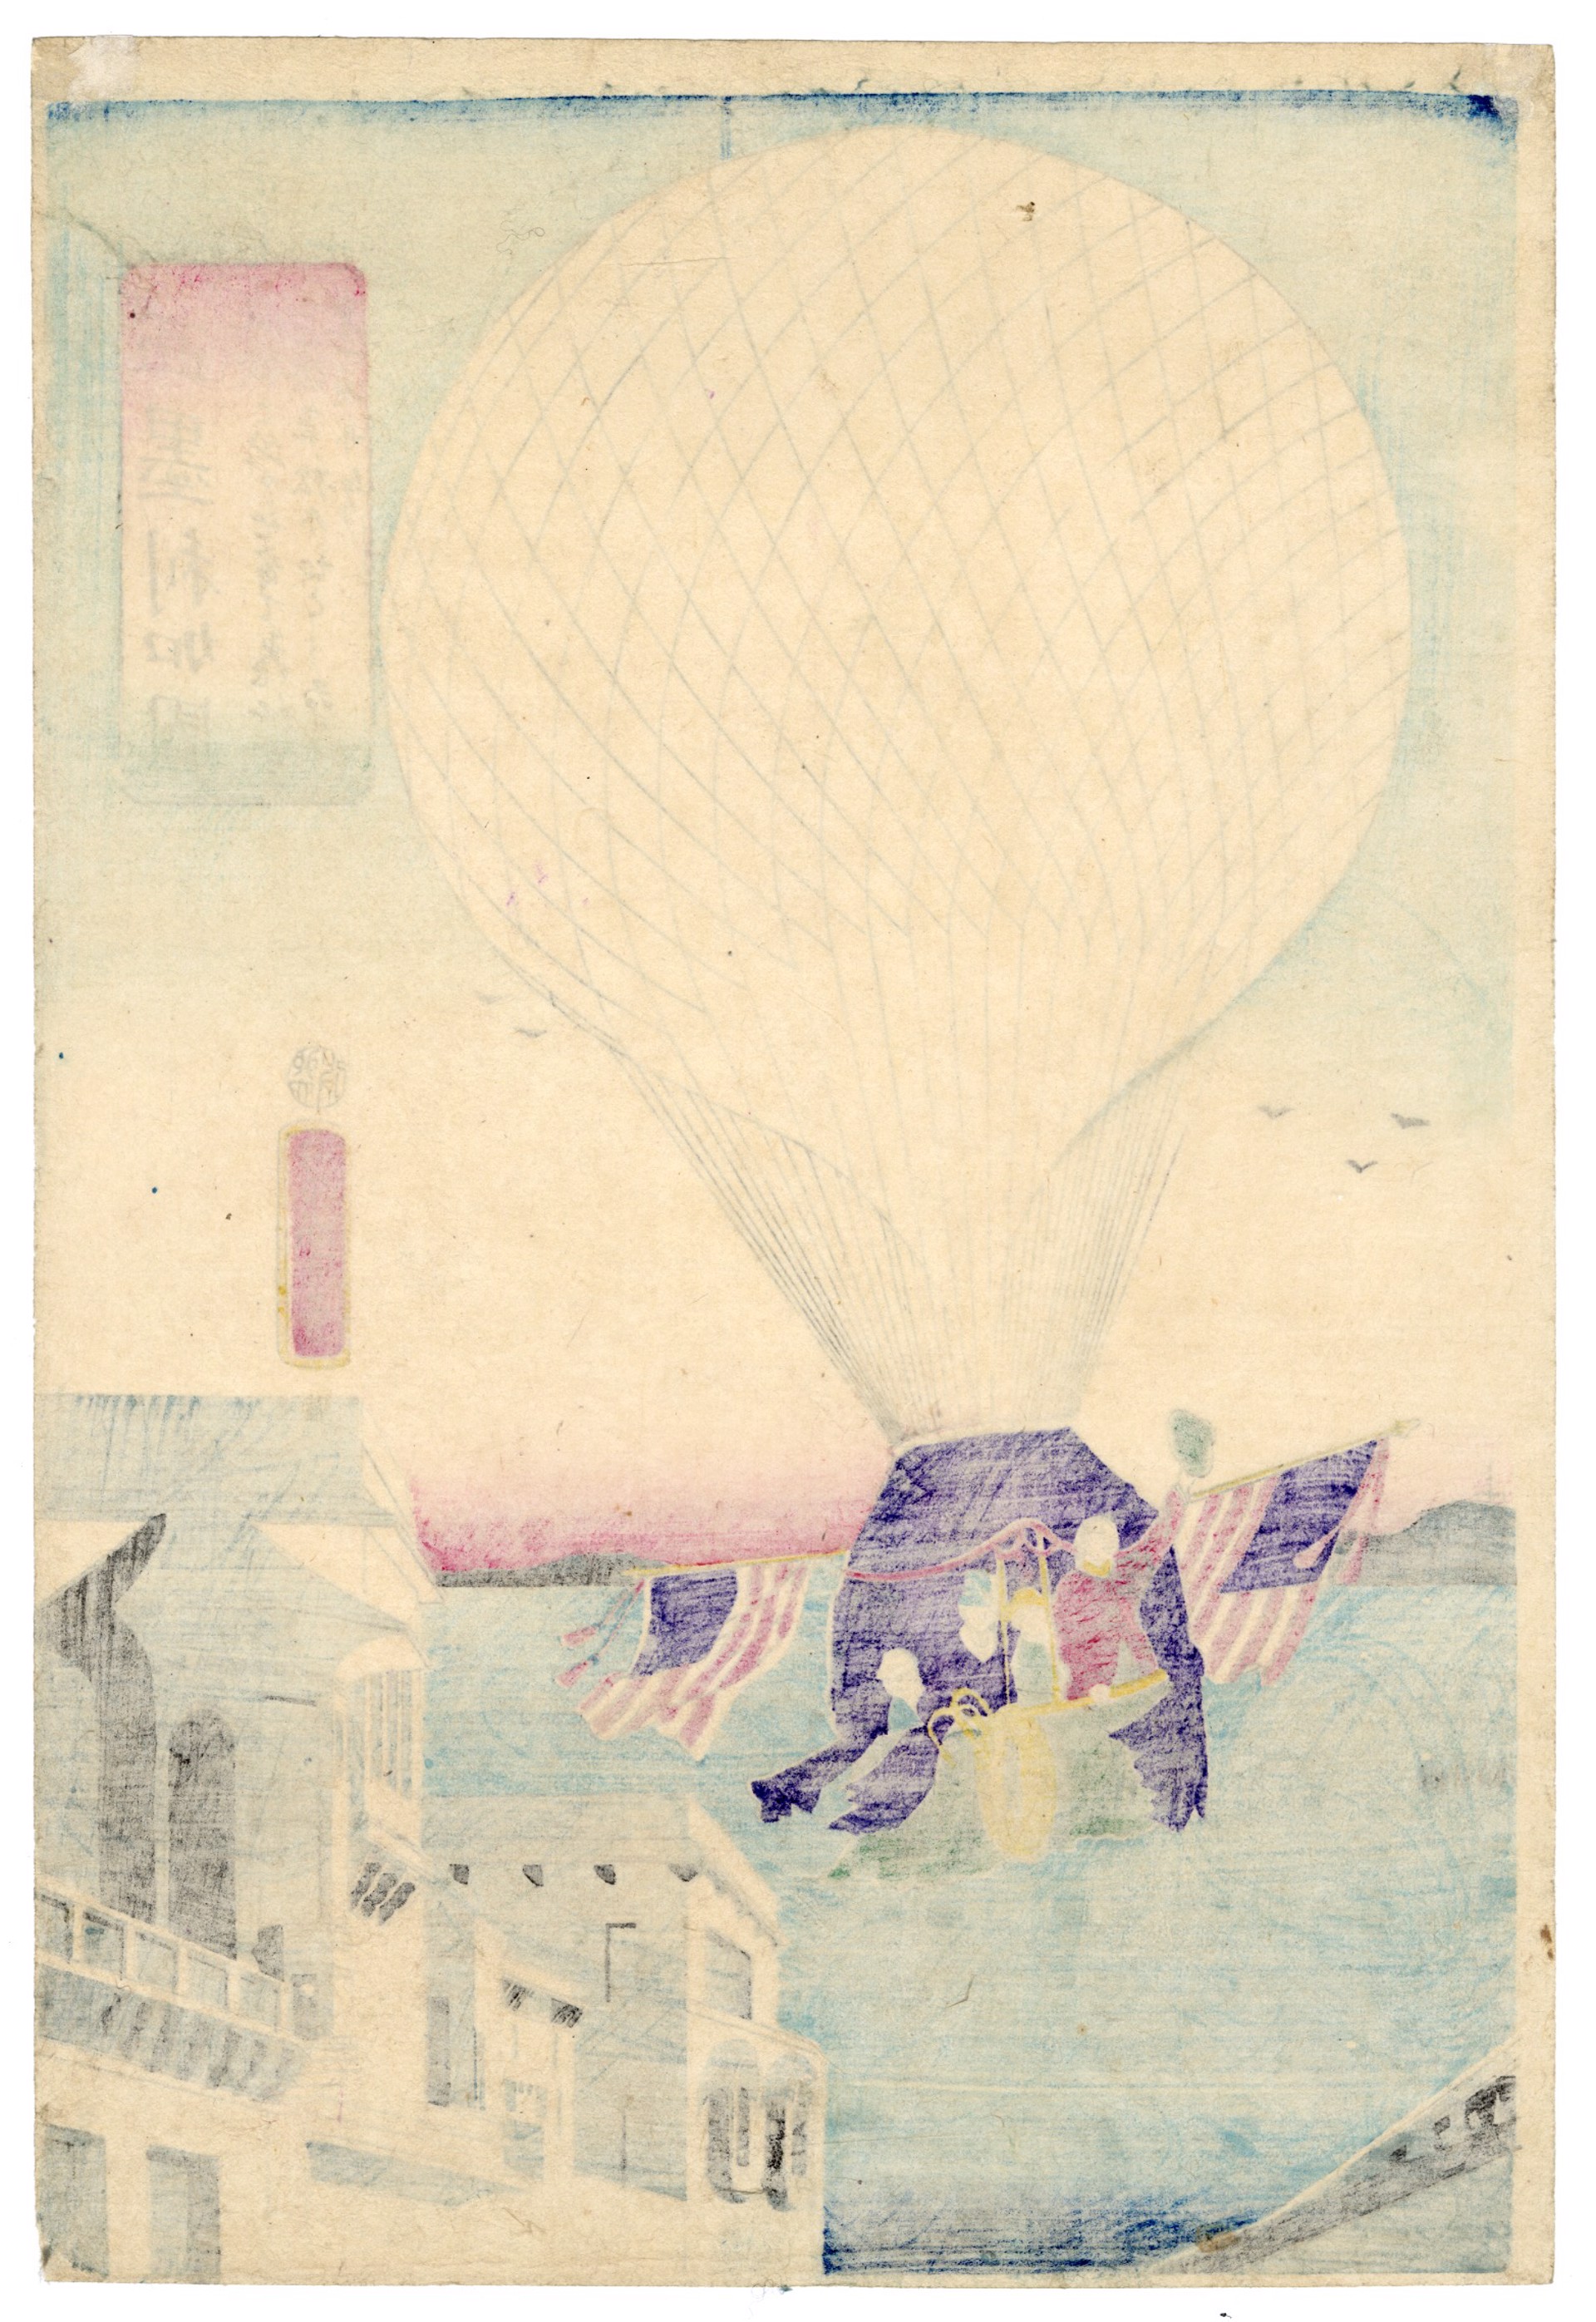 American Balloon Ascension (Yokohama) by Yoshitora